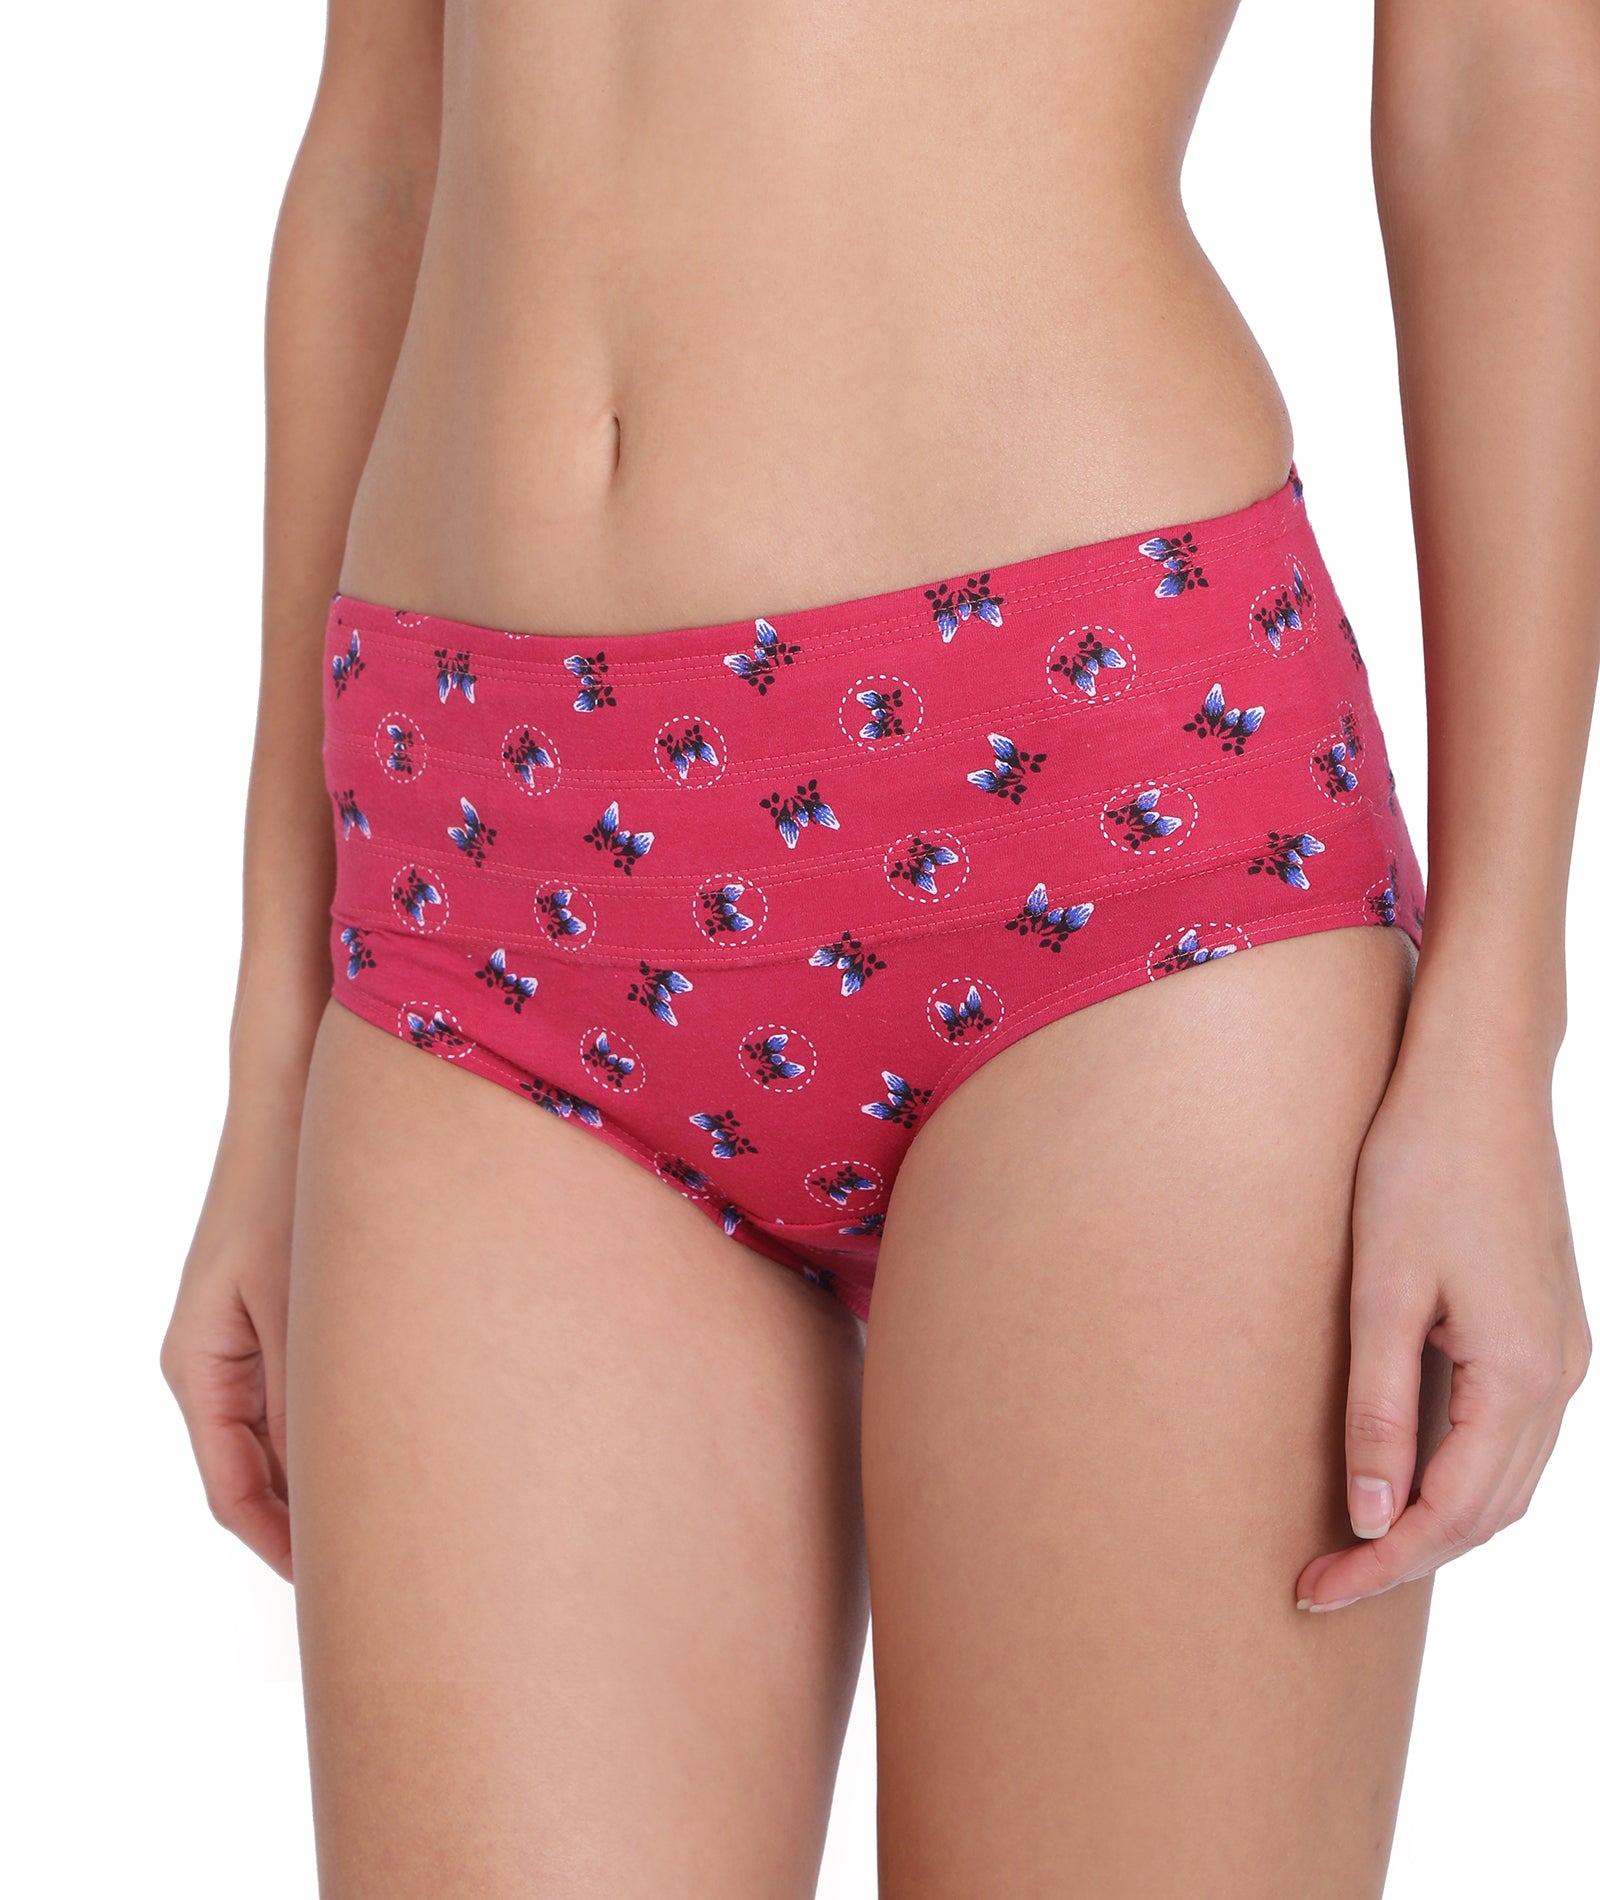 Shop Now,RED ROSE Tummy Trimmer Panties Single Panties